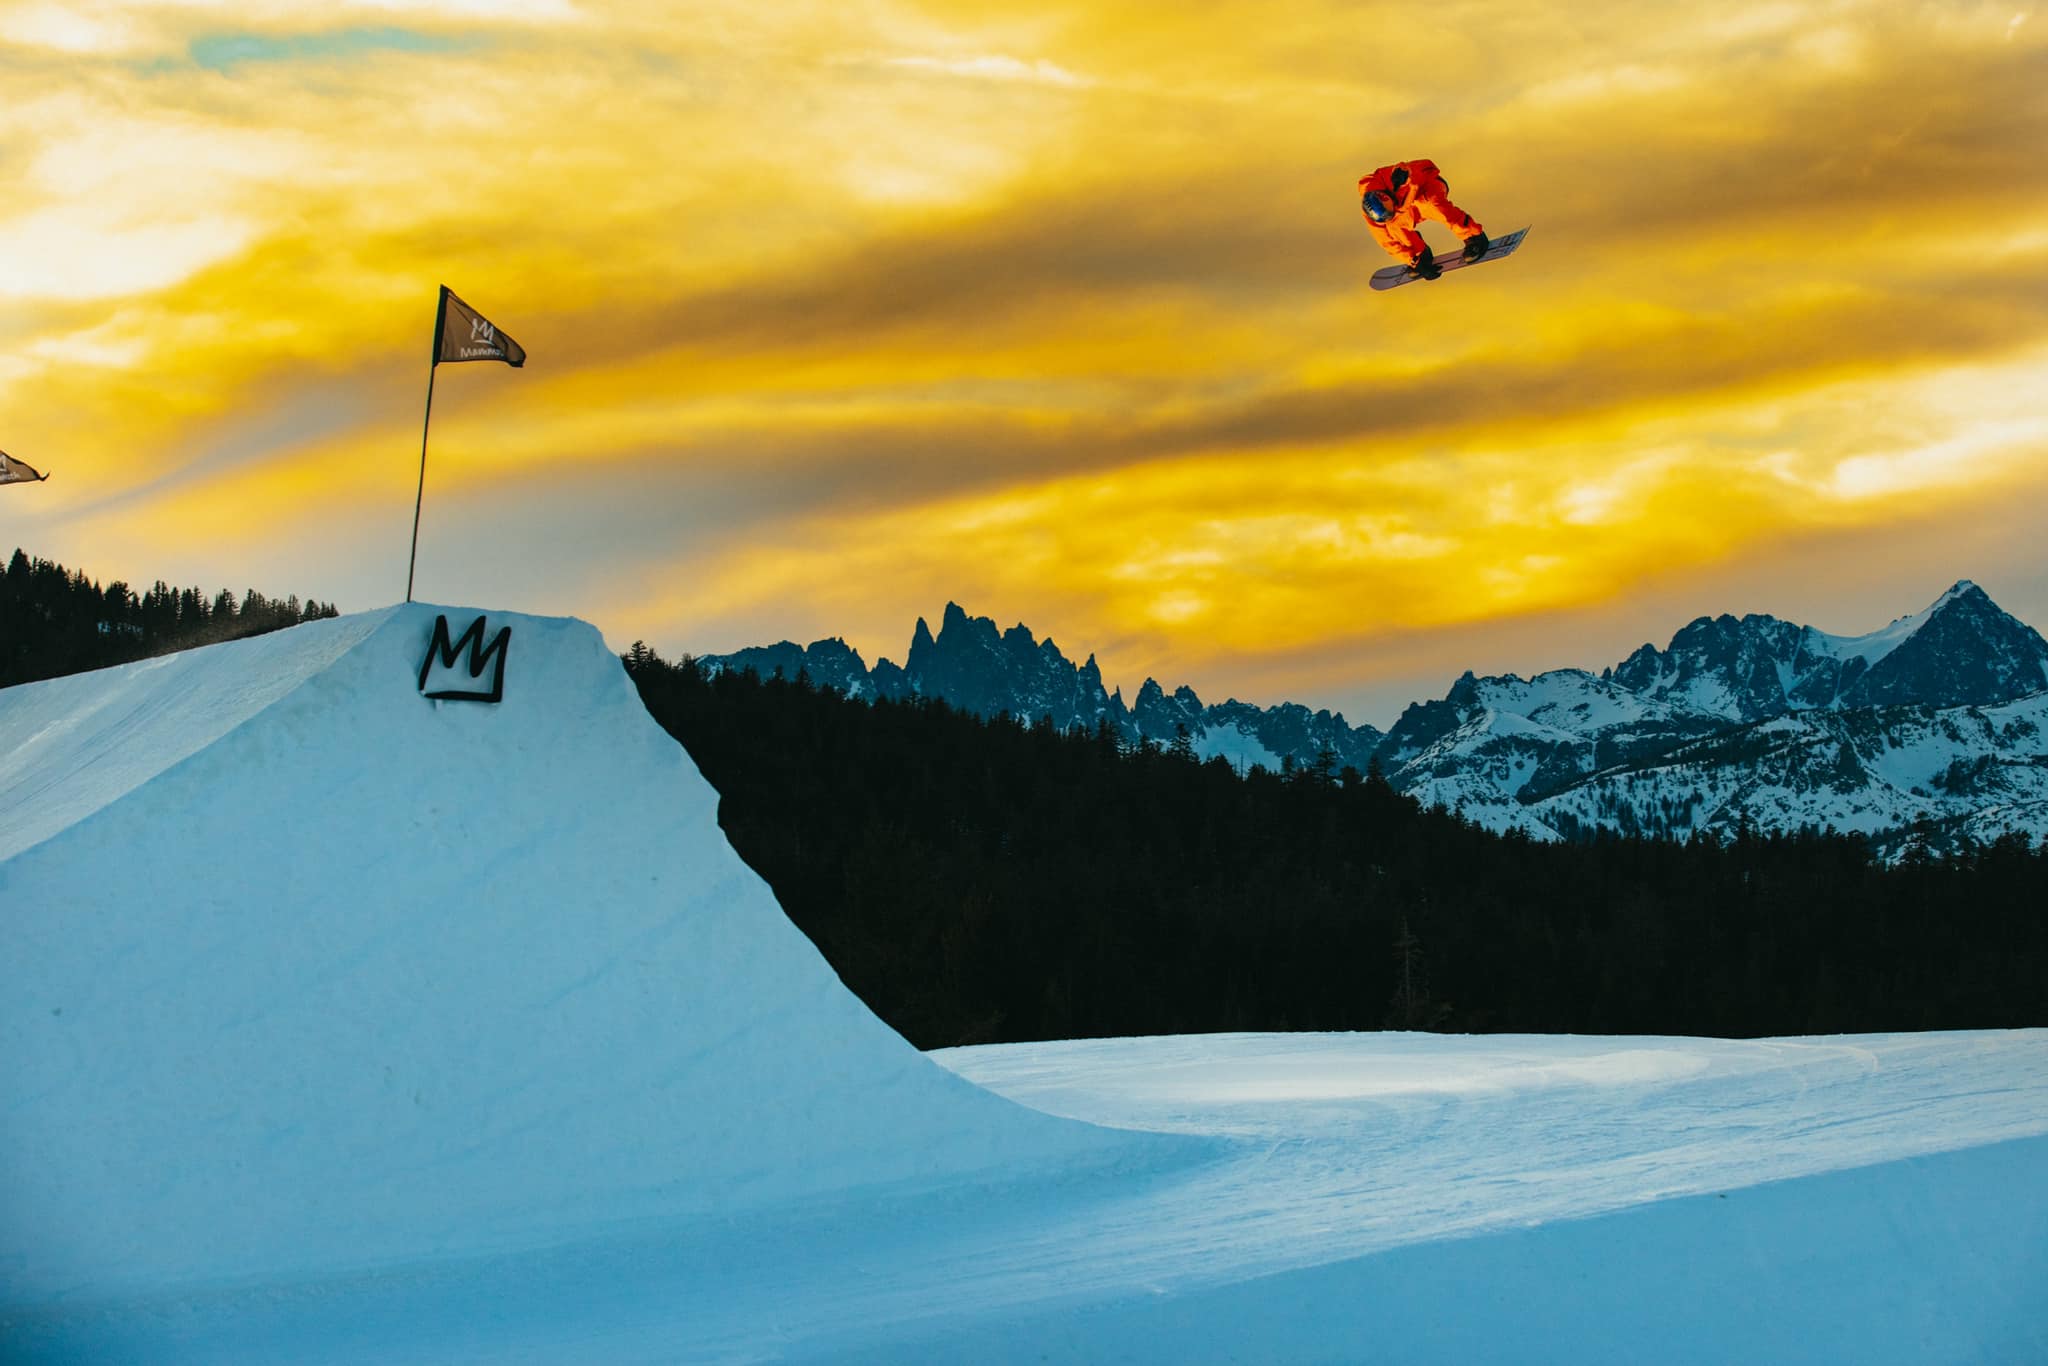 snowboarding doing a huge jump at Mammoth Mountain at dusk